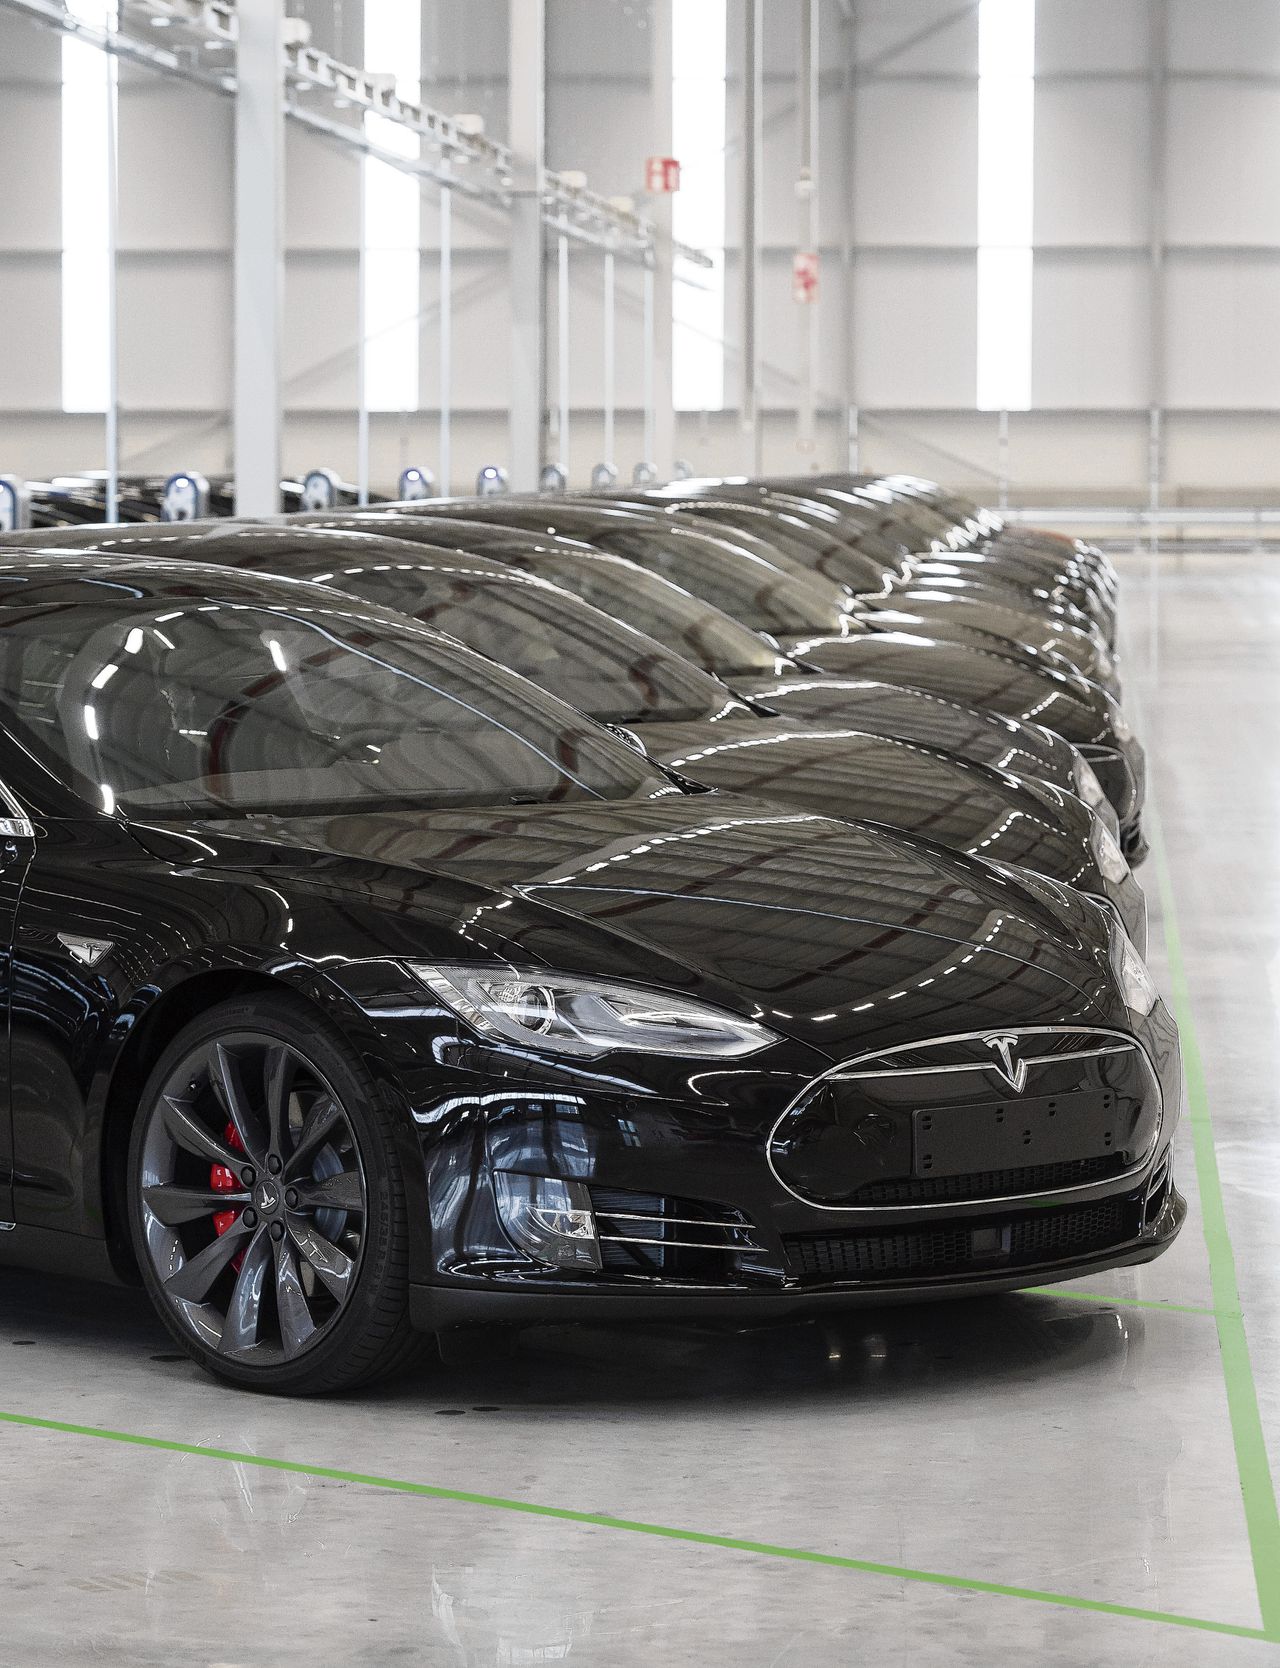 De fabriek van Tesla in Tilburg, die in 2015 opende.